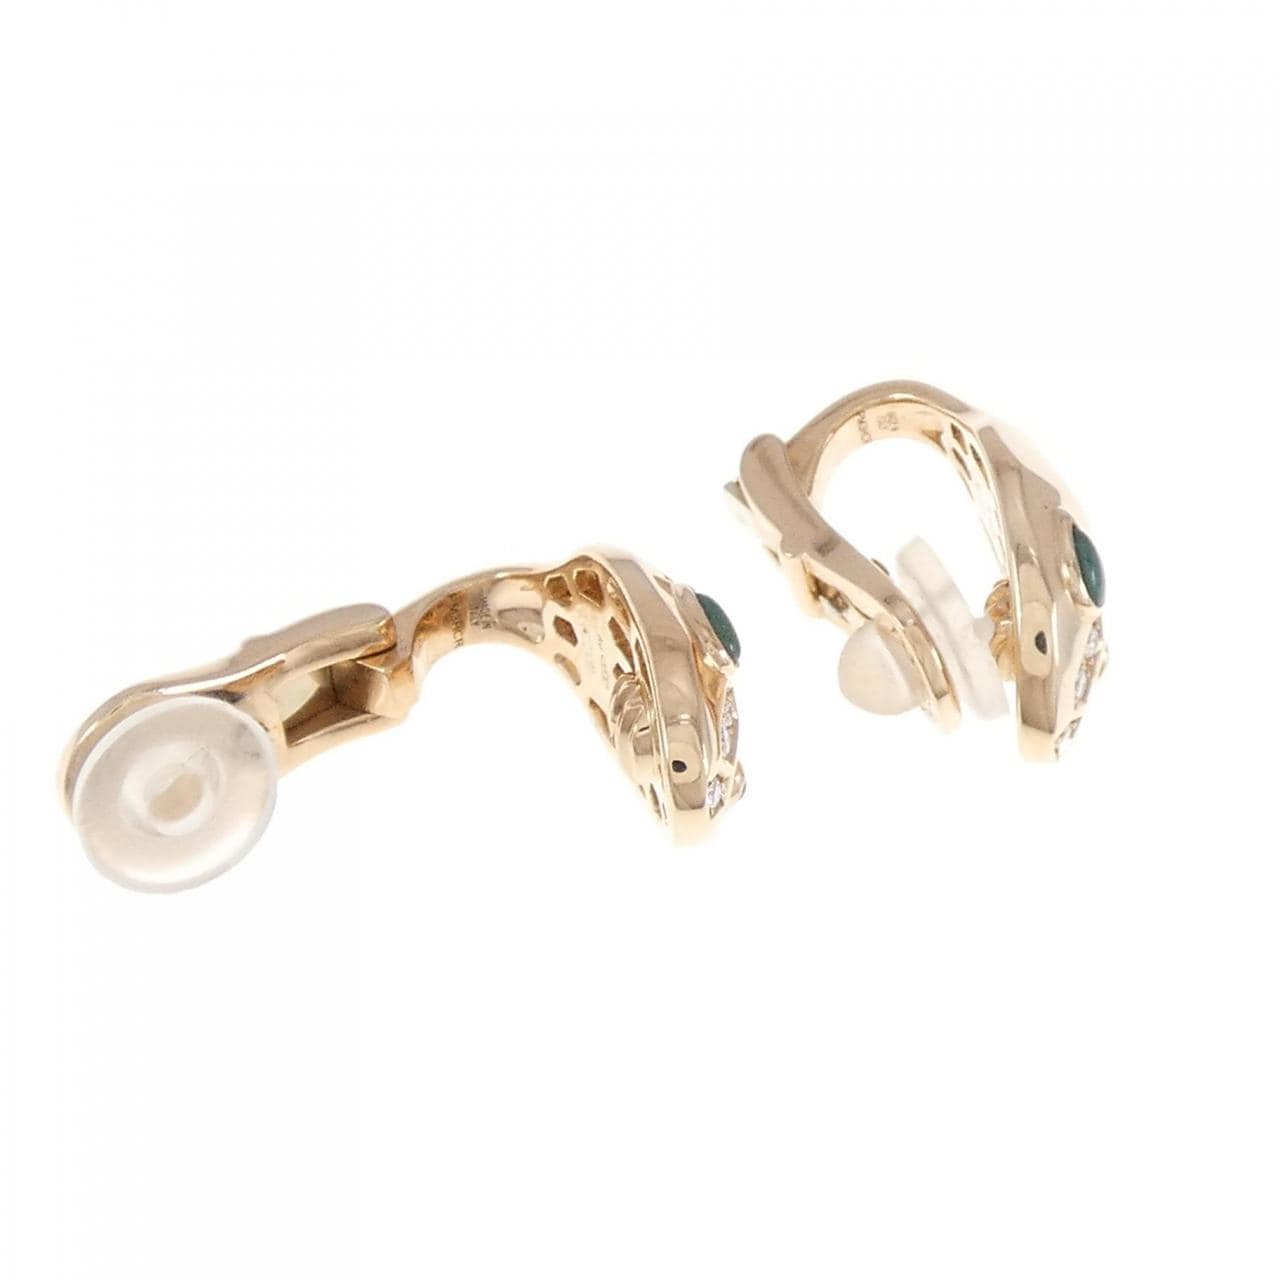 BVLGARI serpenti earrings